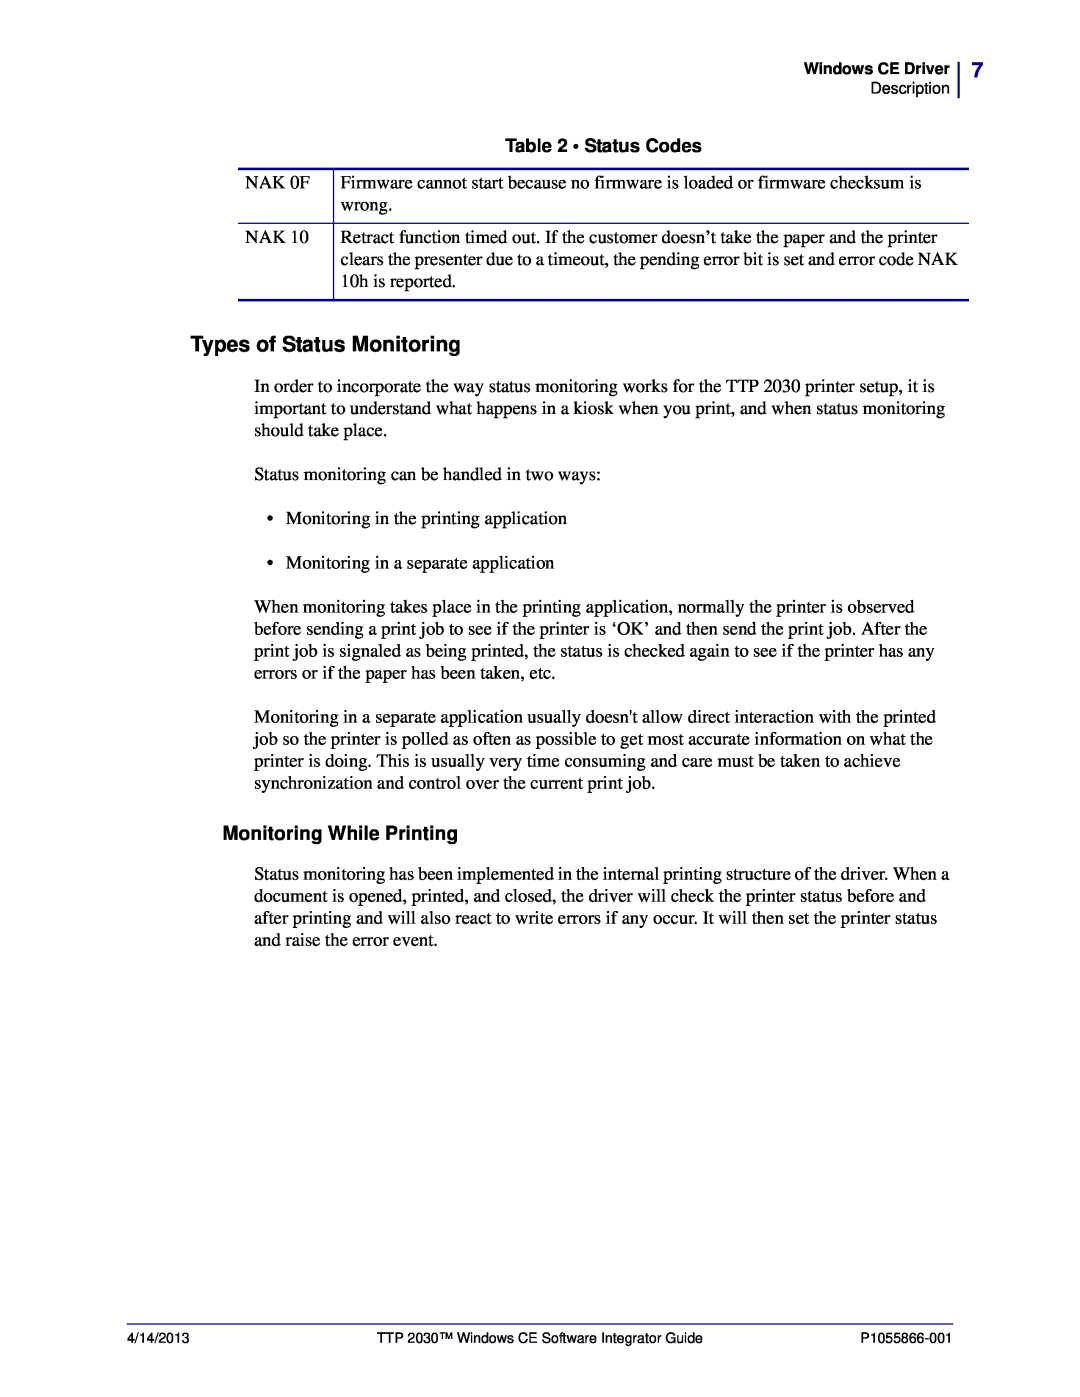 Zebra Technologies TTP 2030 manual Types of Status Monitoring, Monitoring While Printing, Status Codes 